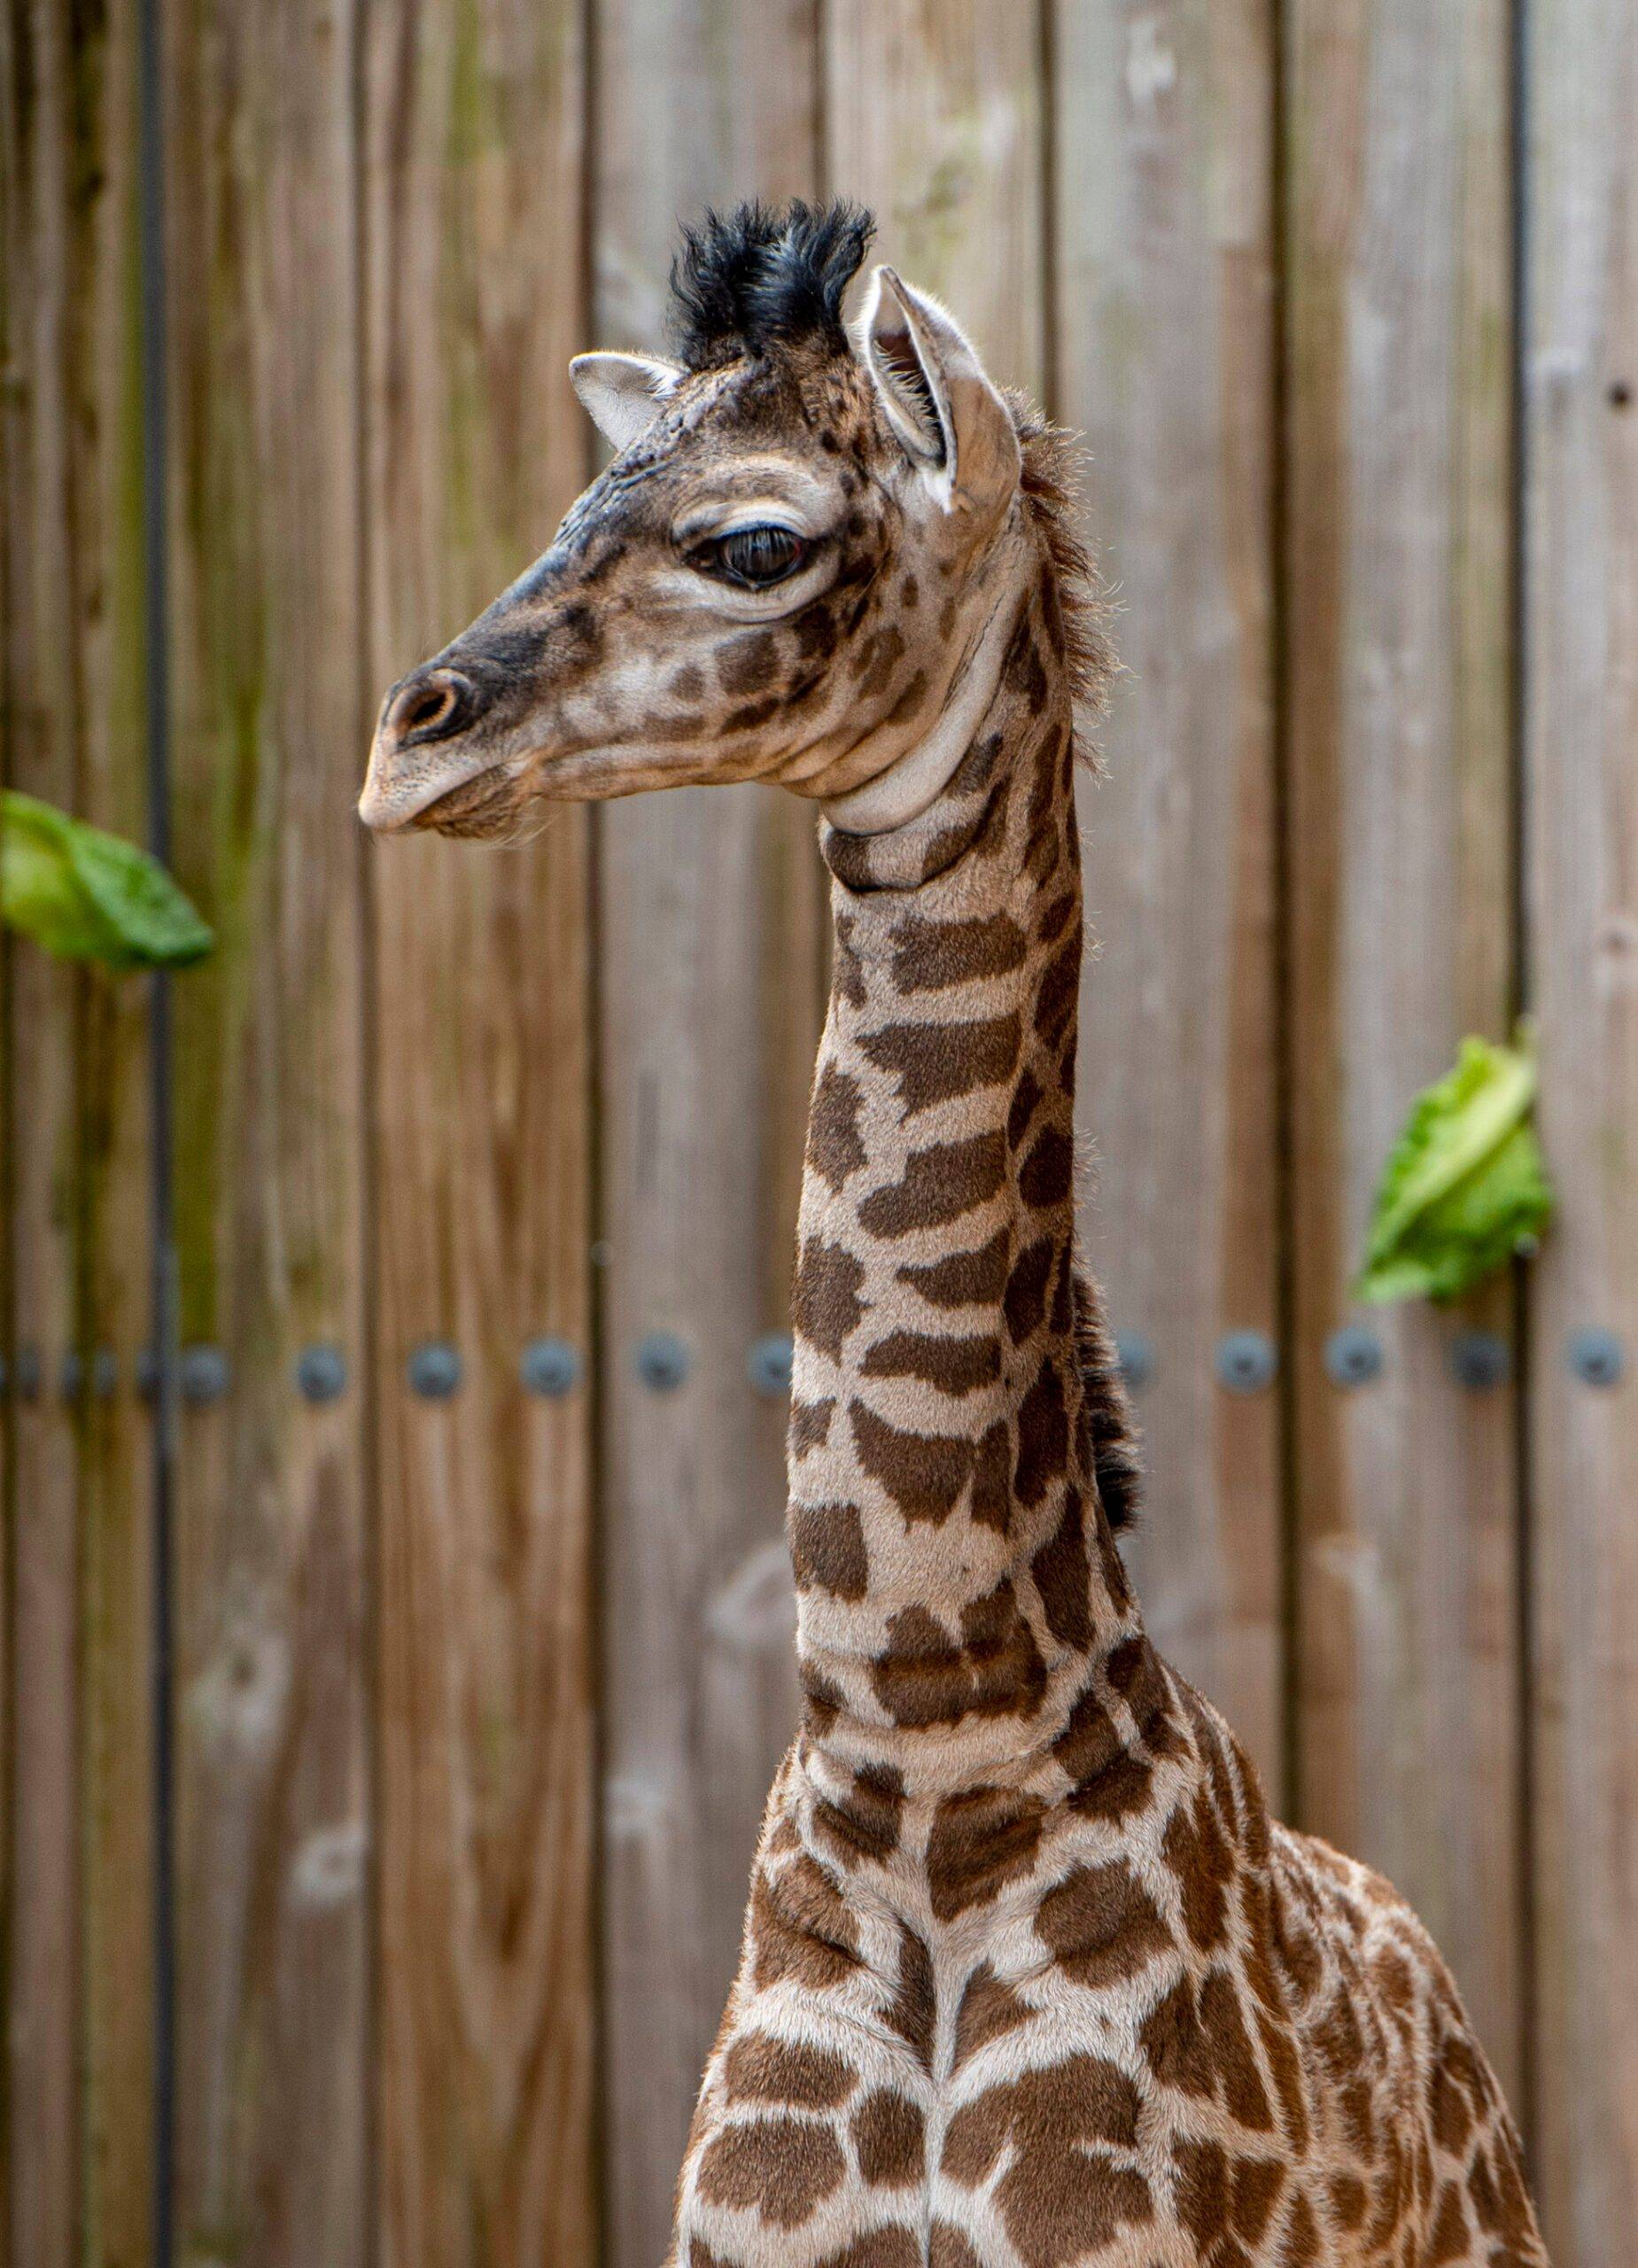 Masai giraffe calf bornJune 10 2021 at Disney's Animal Kingdom